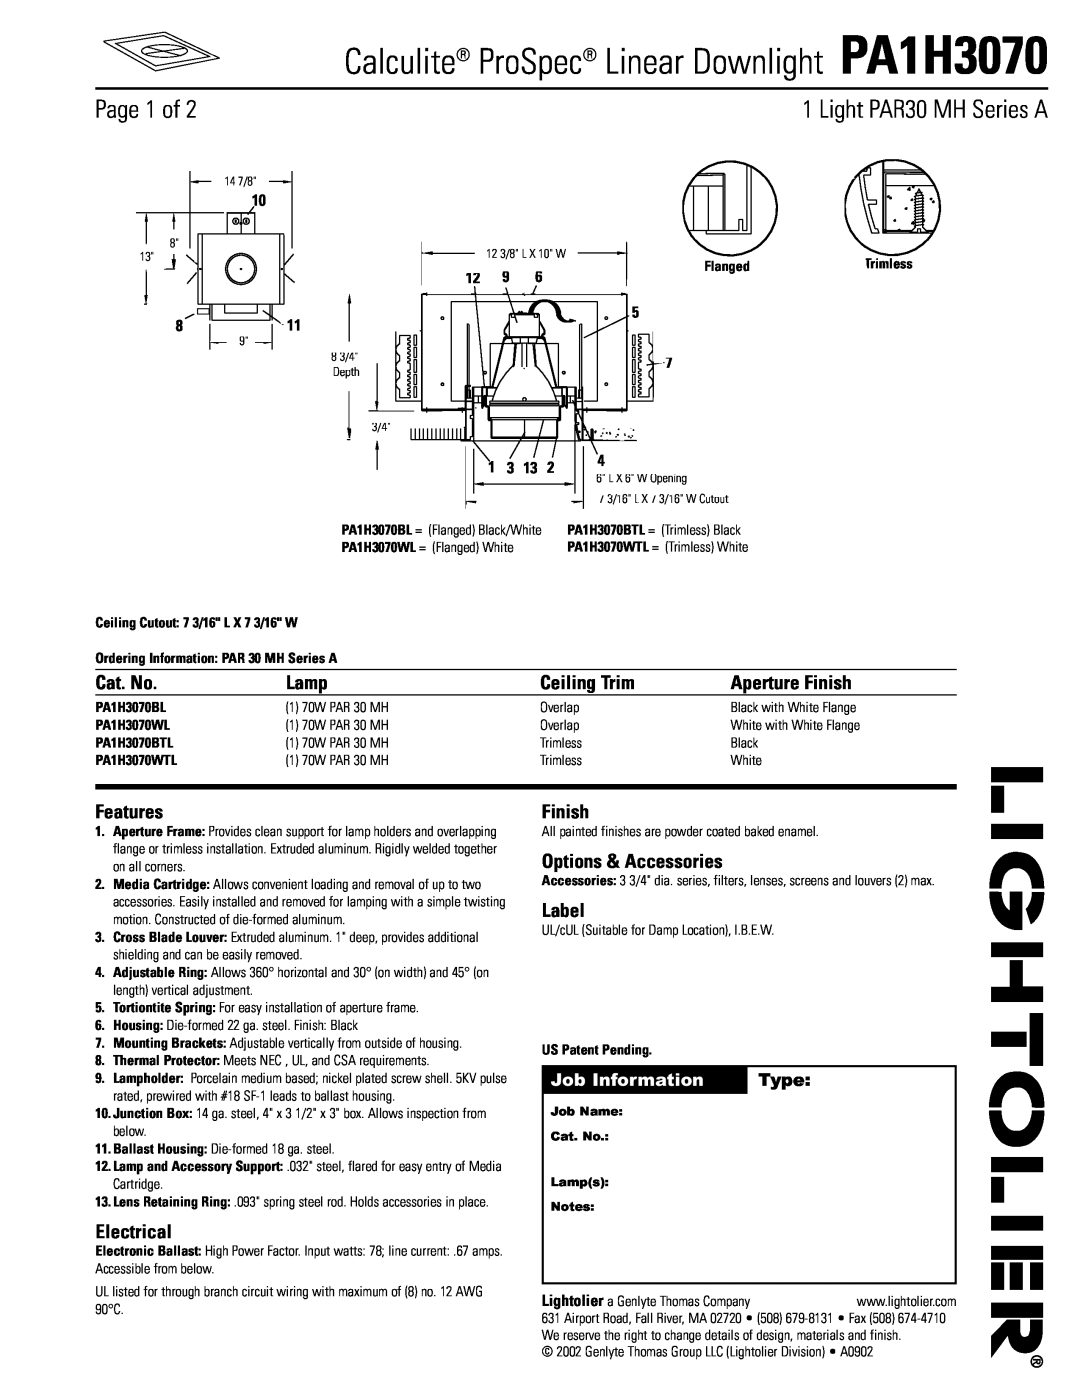 Lightolier manual Calculite ProSpec Linear Downlight PA1H3070, Page 1 of, Light PAR30 MH Series A, Cat. No, Lamp, Label 